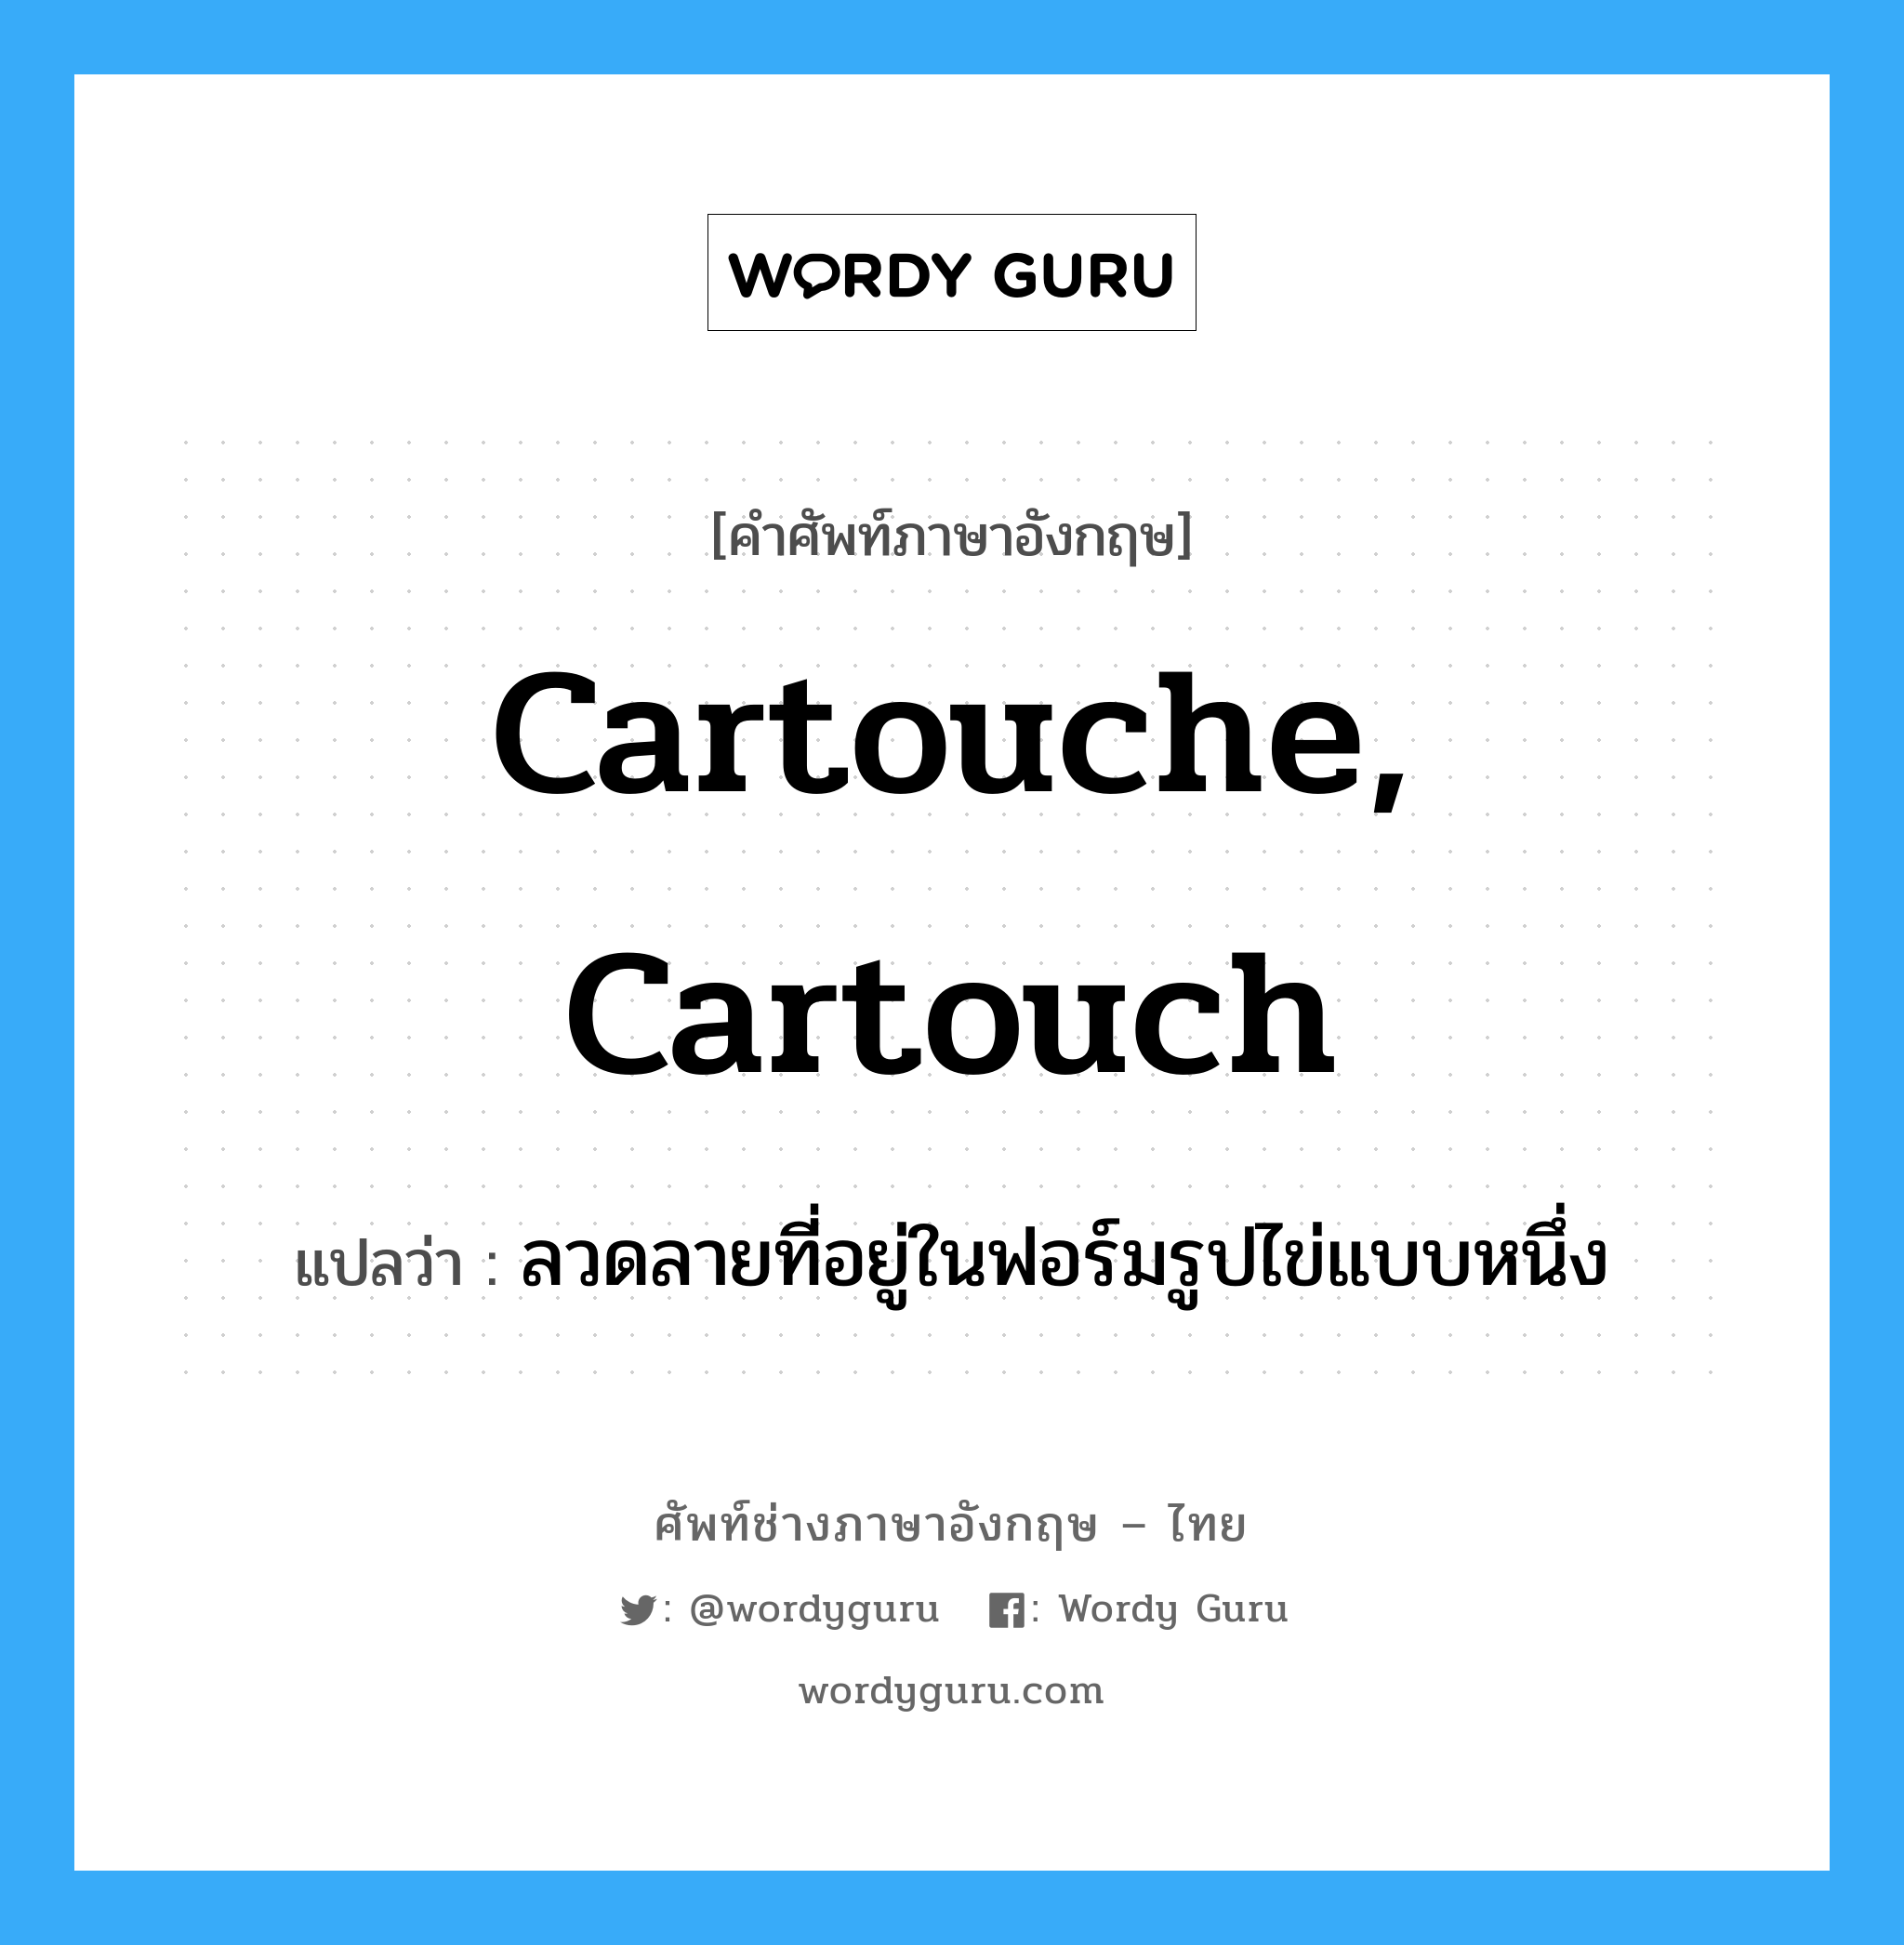 cartouche, cartouch แปลว่า?, คำศัพท์ช่างภาษาอังกฤษ - ไทย cartouche, cartouch คำศัพท์ภาษาอังกฤษ cartouche, cartouch แปลว่า ลวดลายที่อยู่ในฟอร์มรูปไข่แบบหนึ่ง